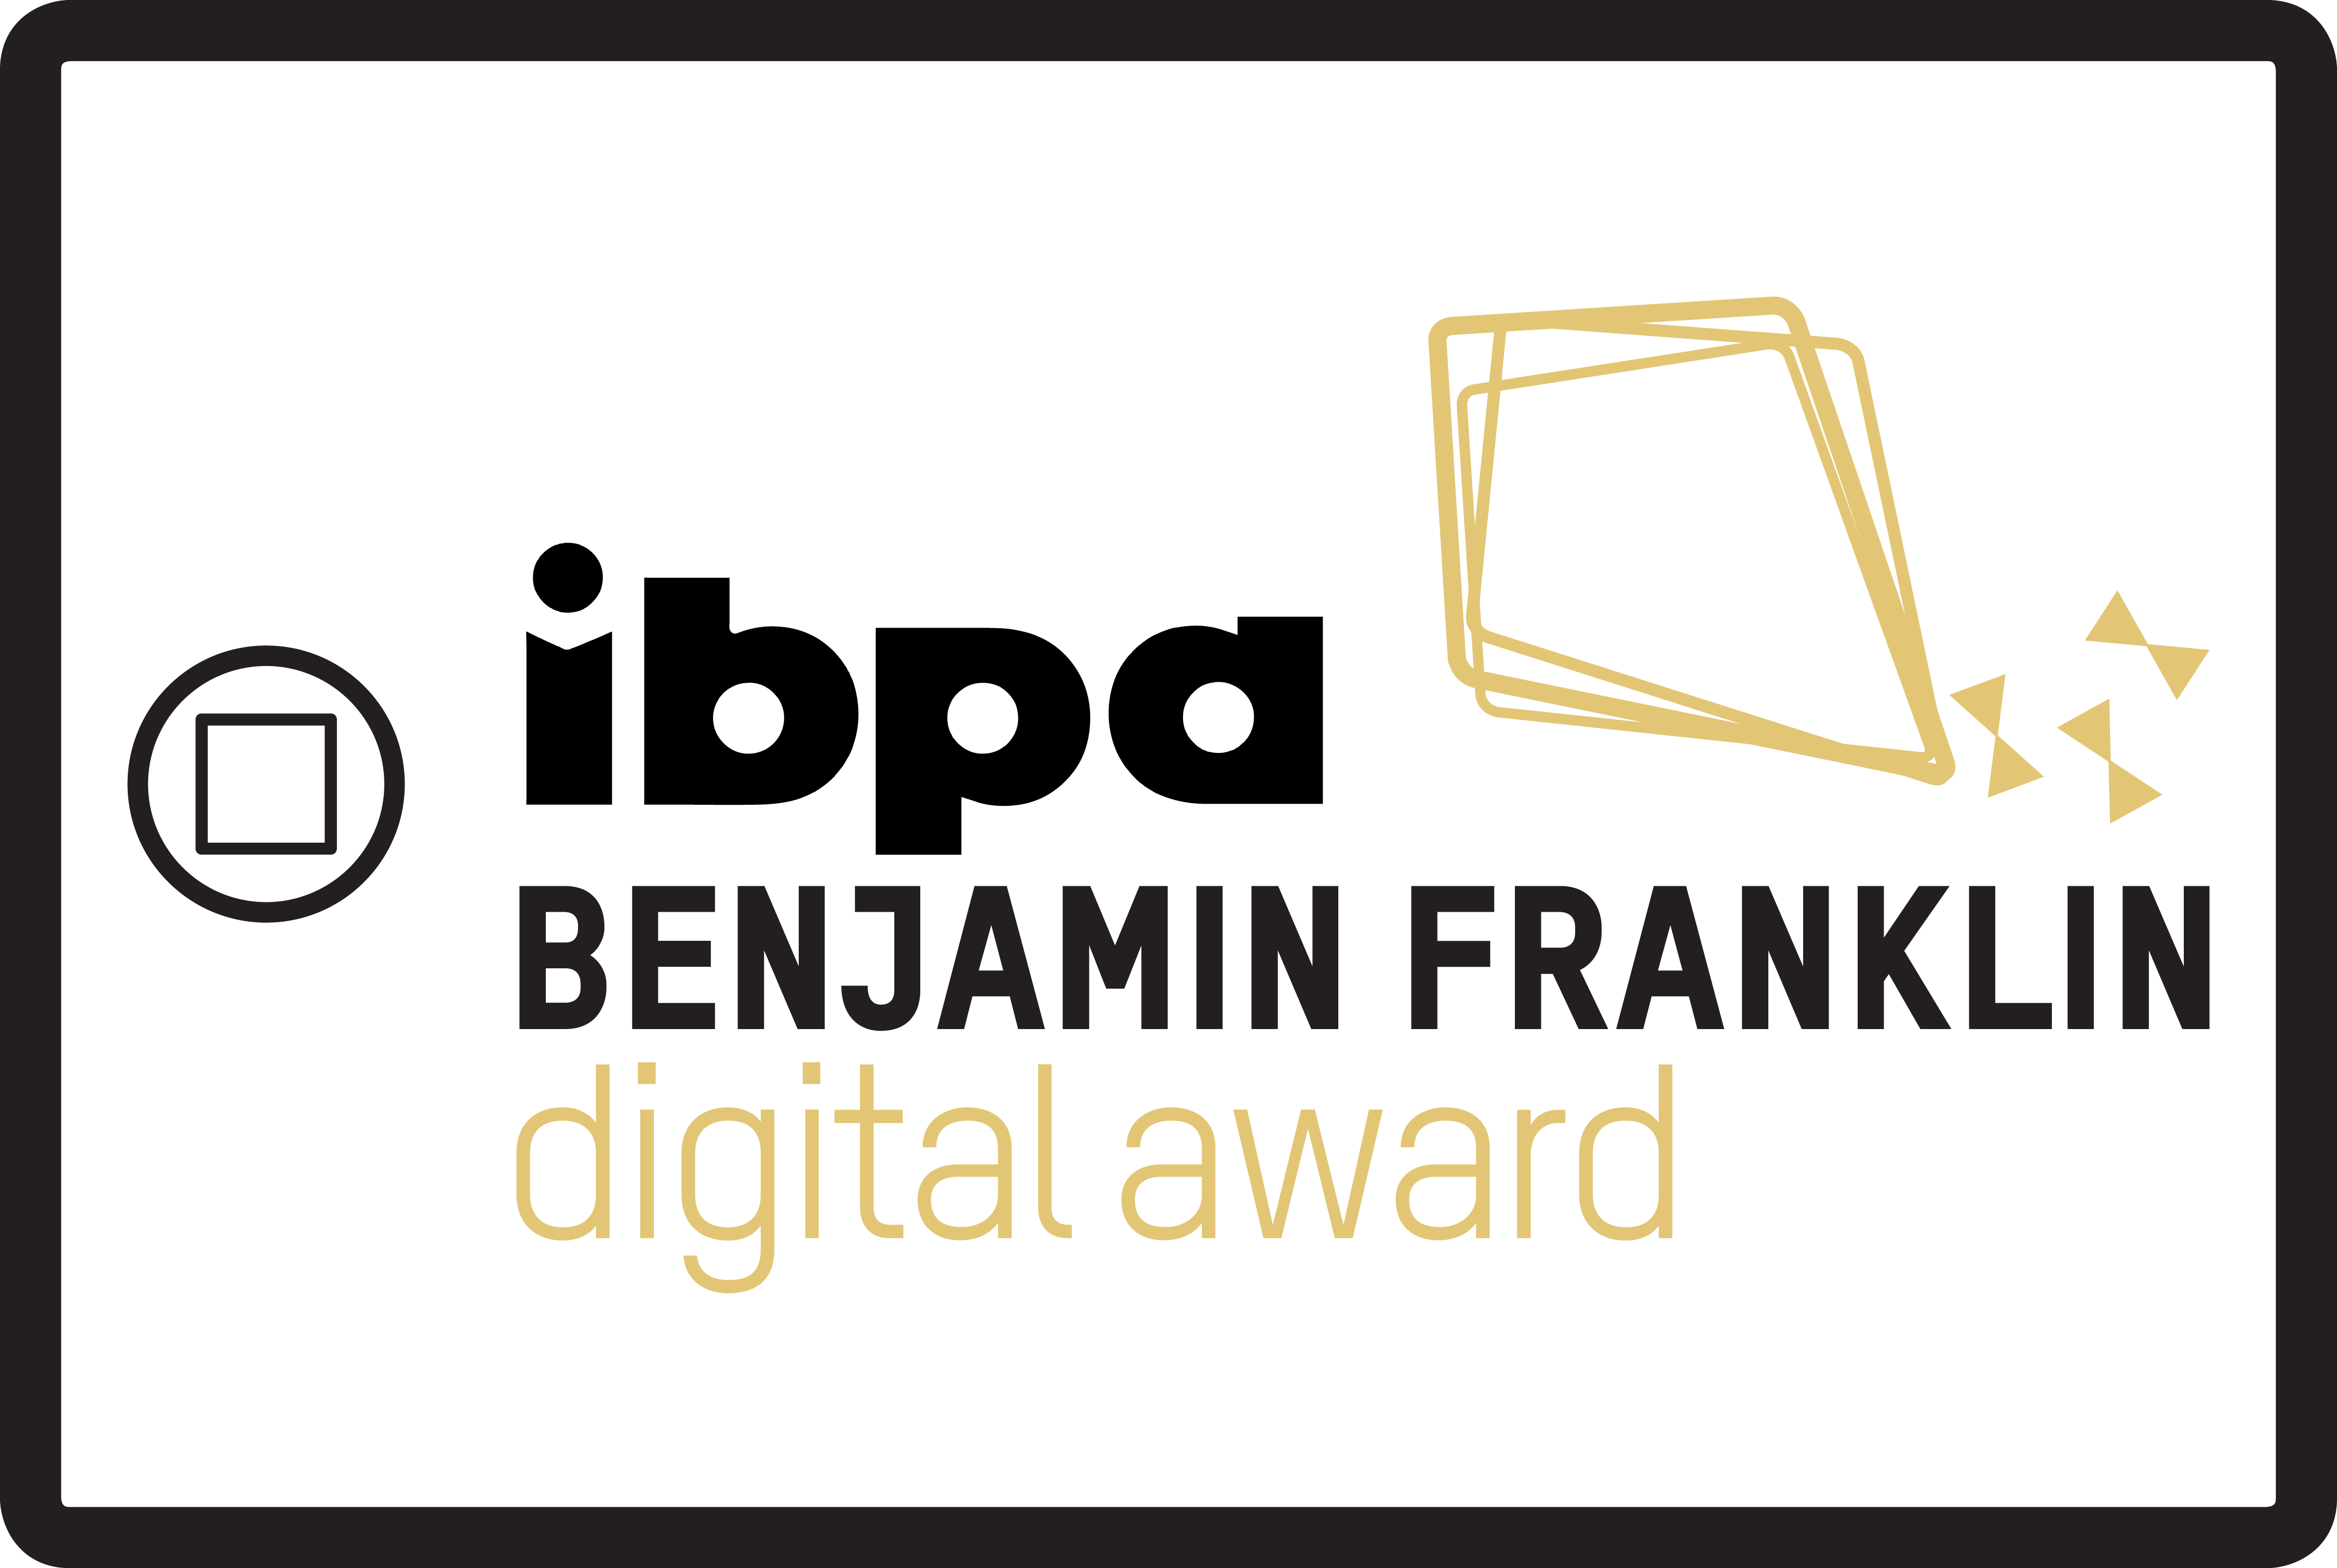 Benjamin Franklin Digital Award Gold Seal